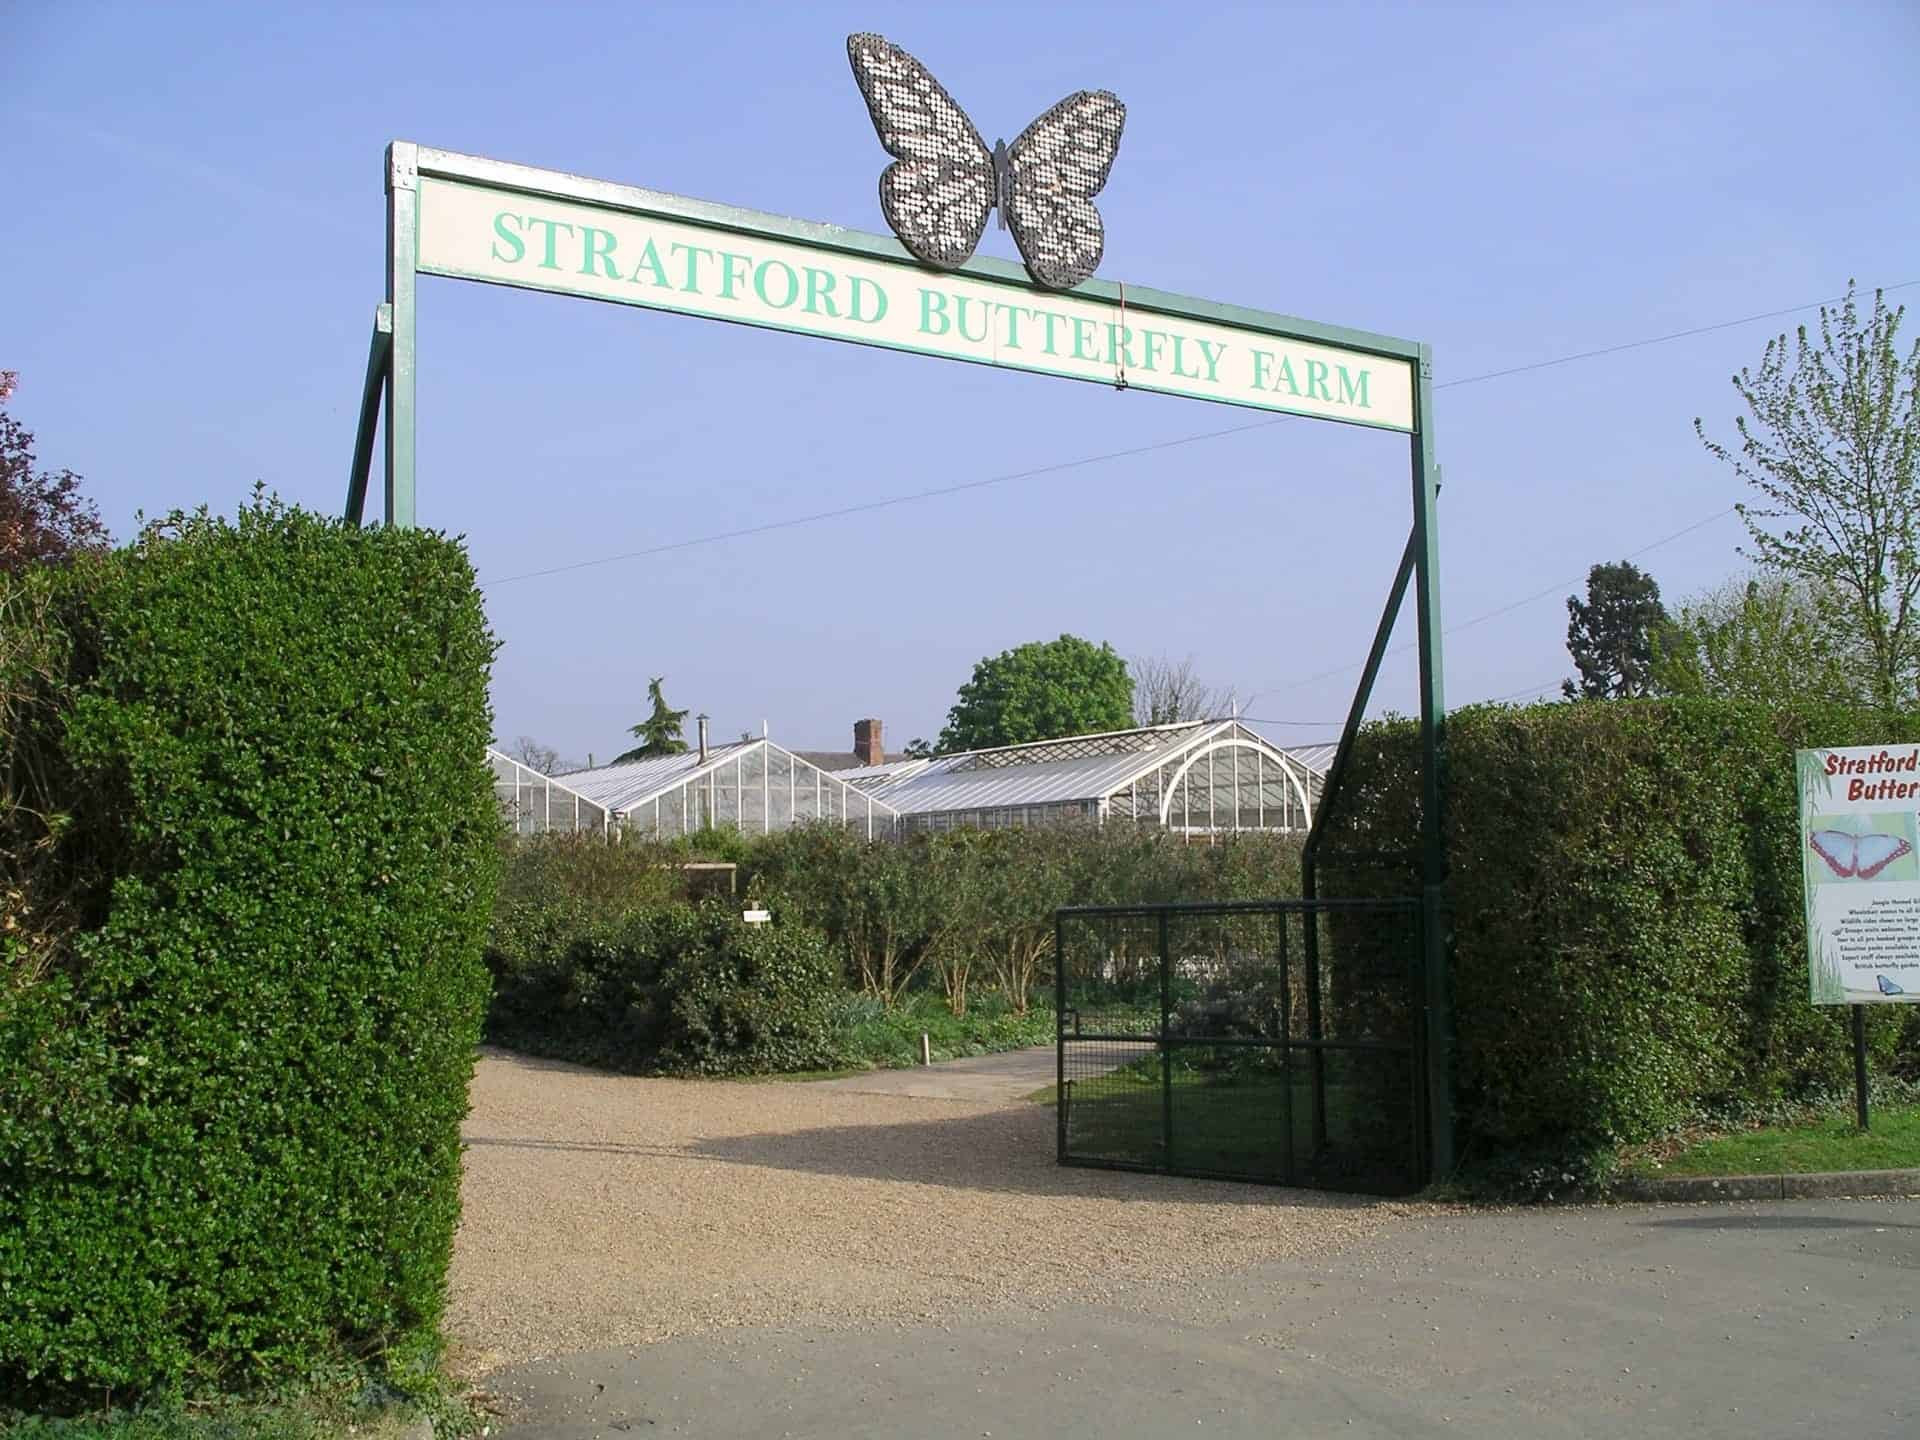 Stratford Butterfly Farm in UK